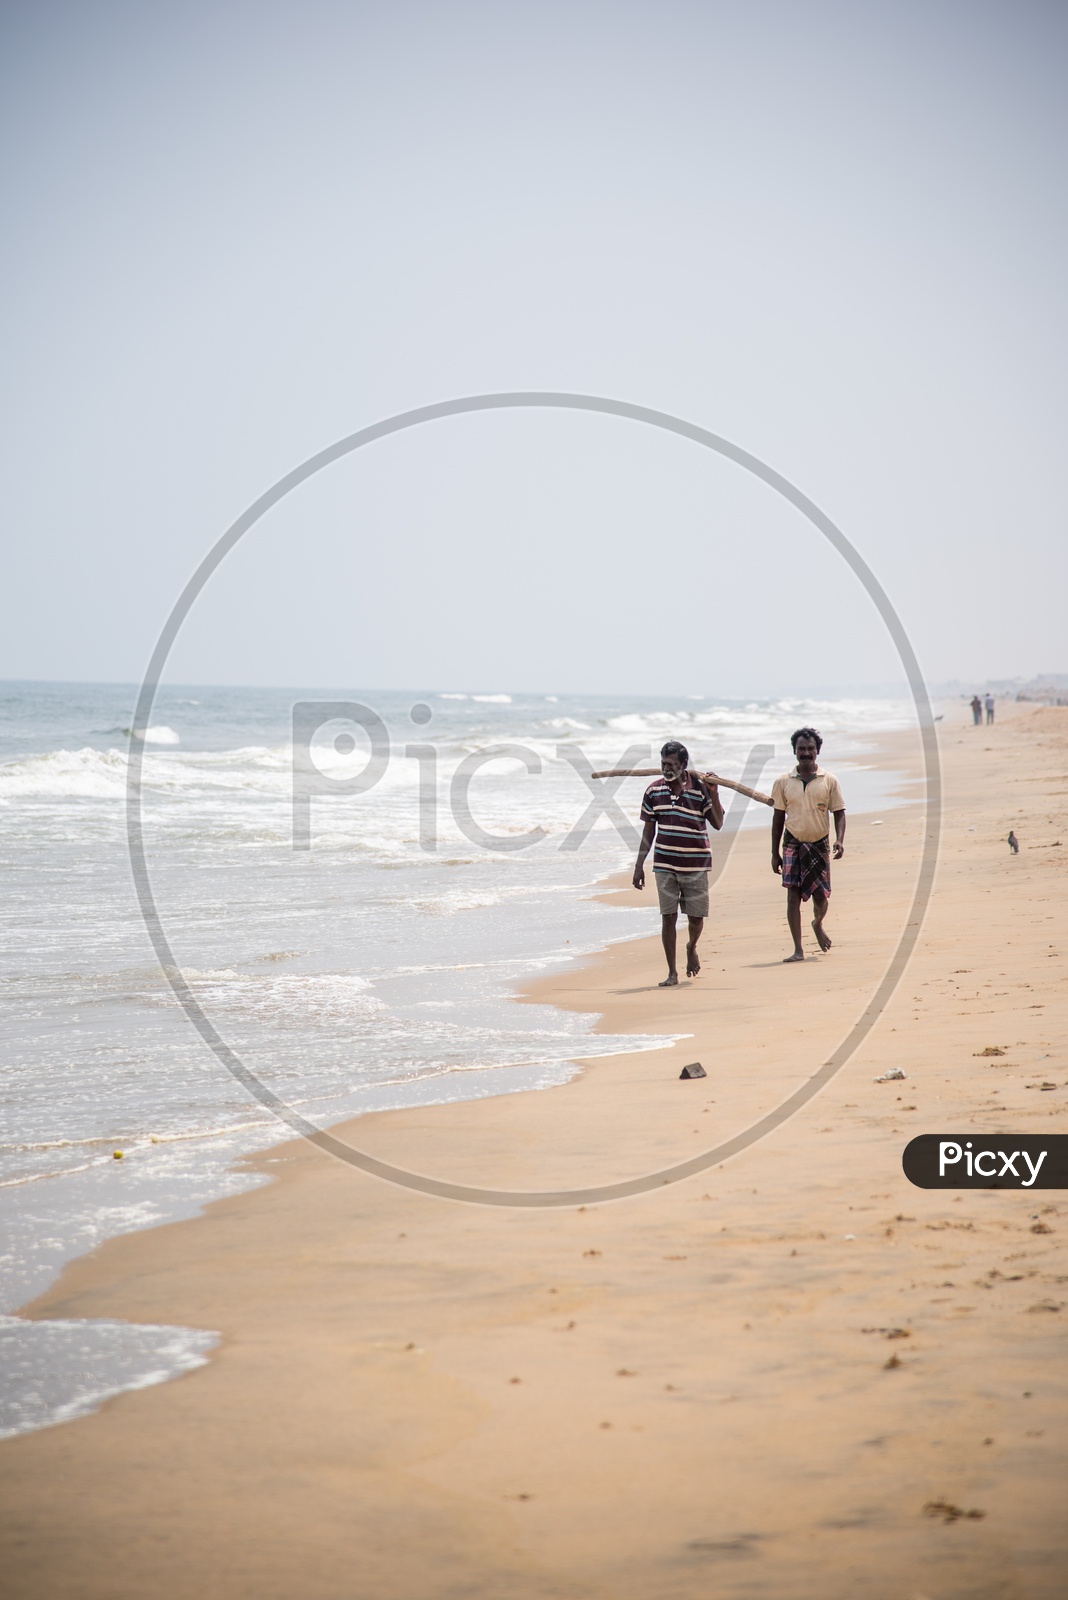 A couple of Fishermen walking across the Tiruvanmiyur Beach